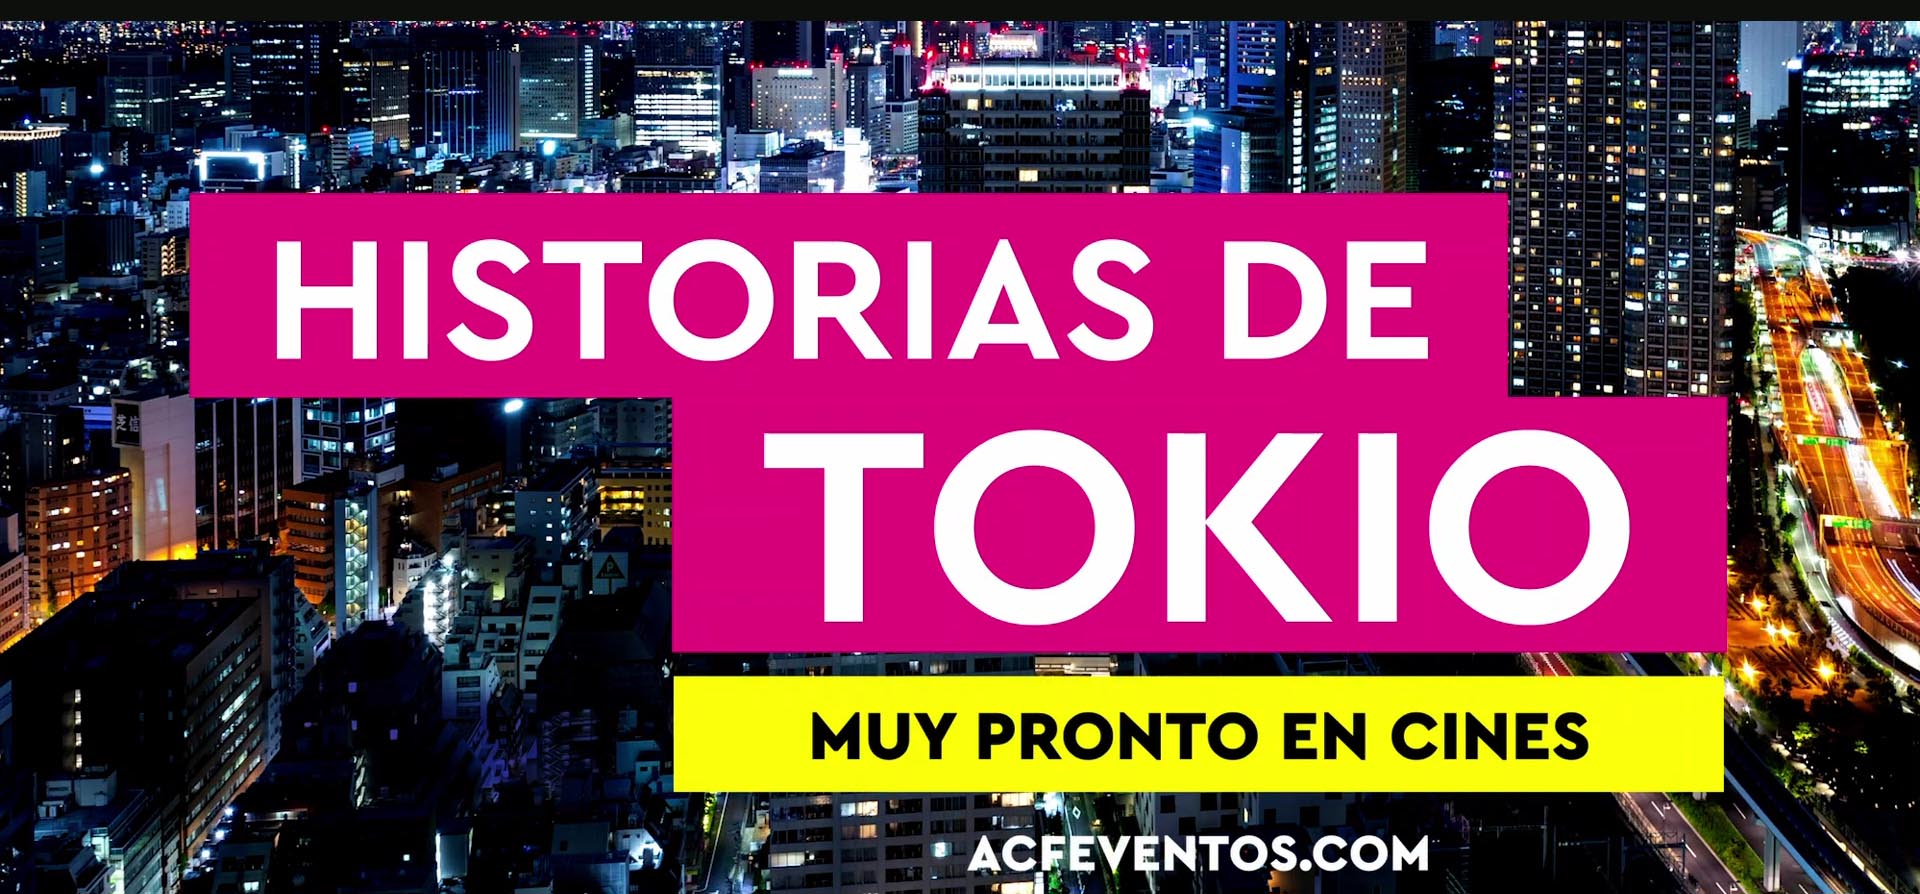 Crítica: ‘Historias de Tokio’